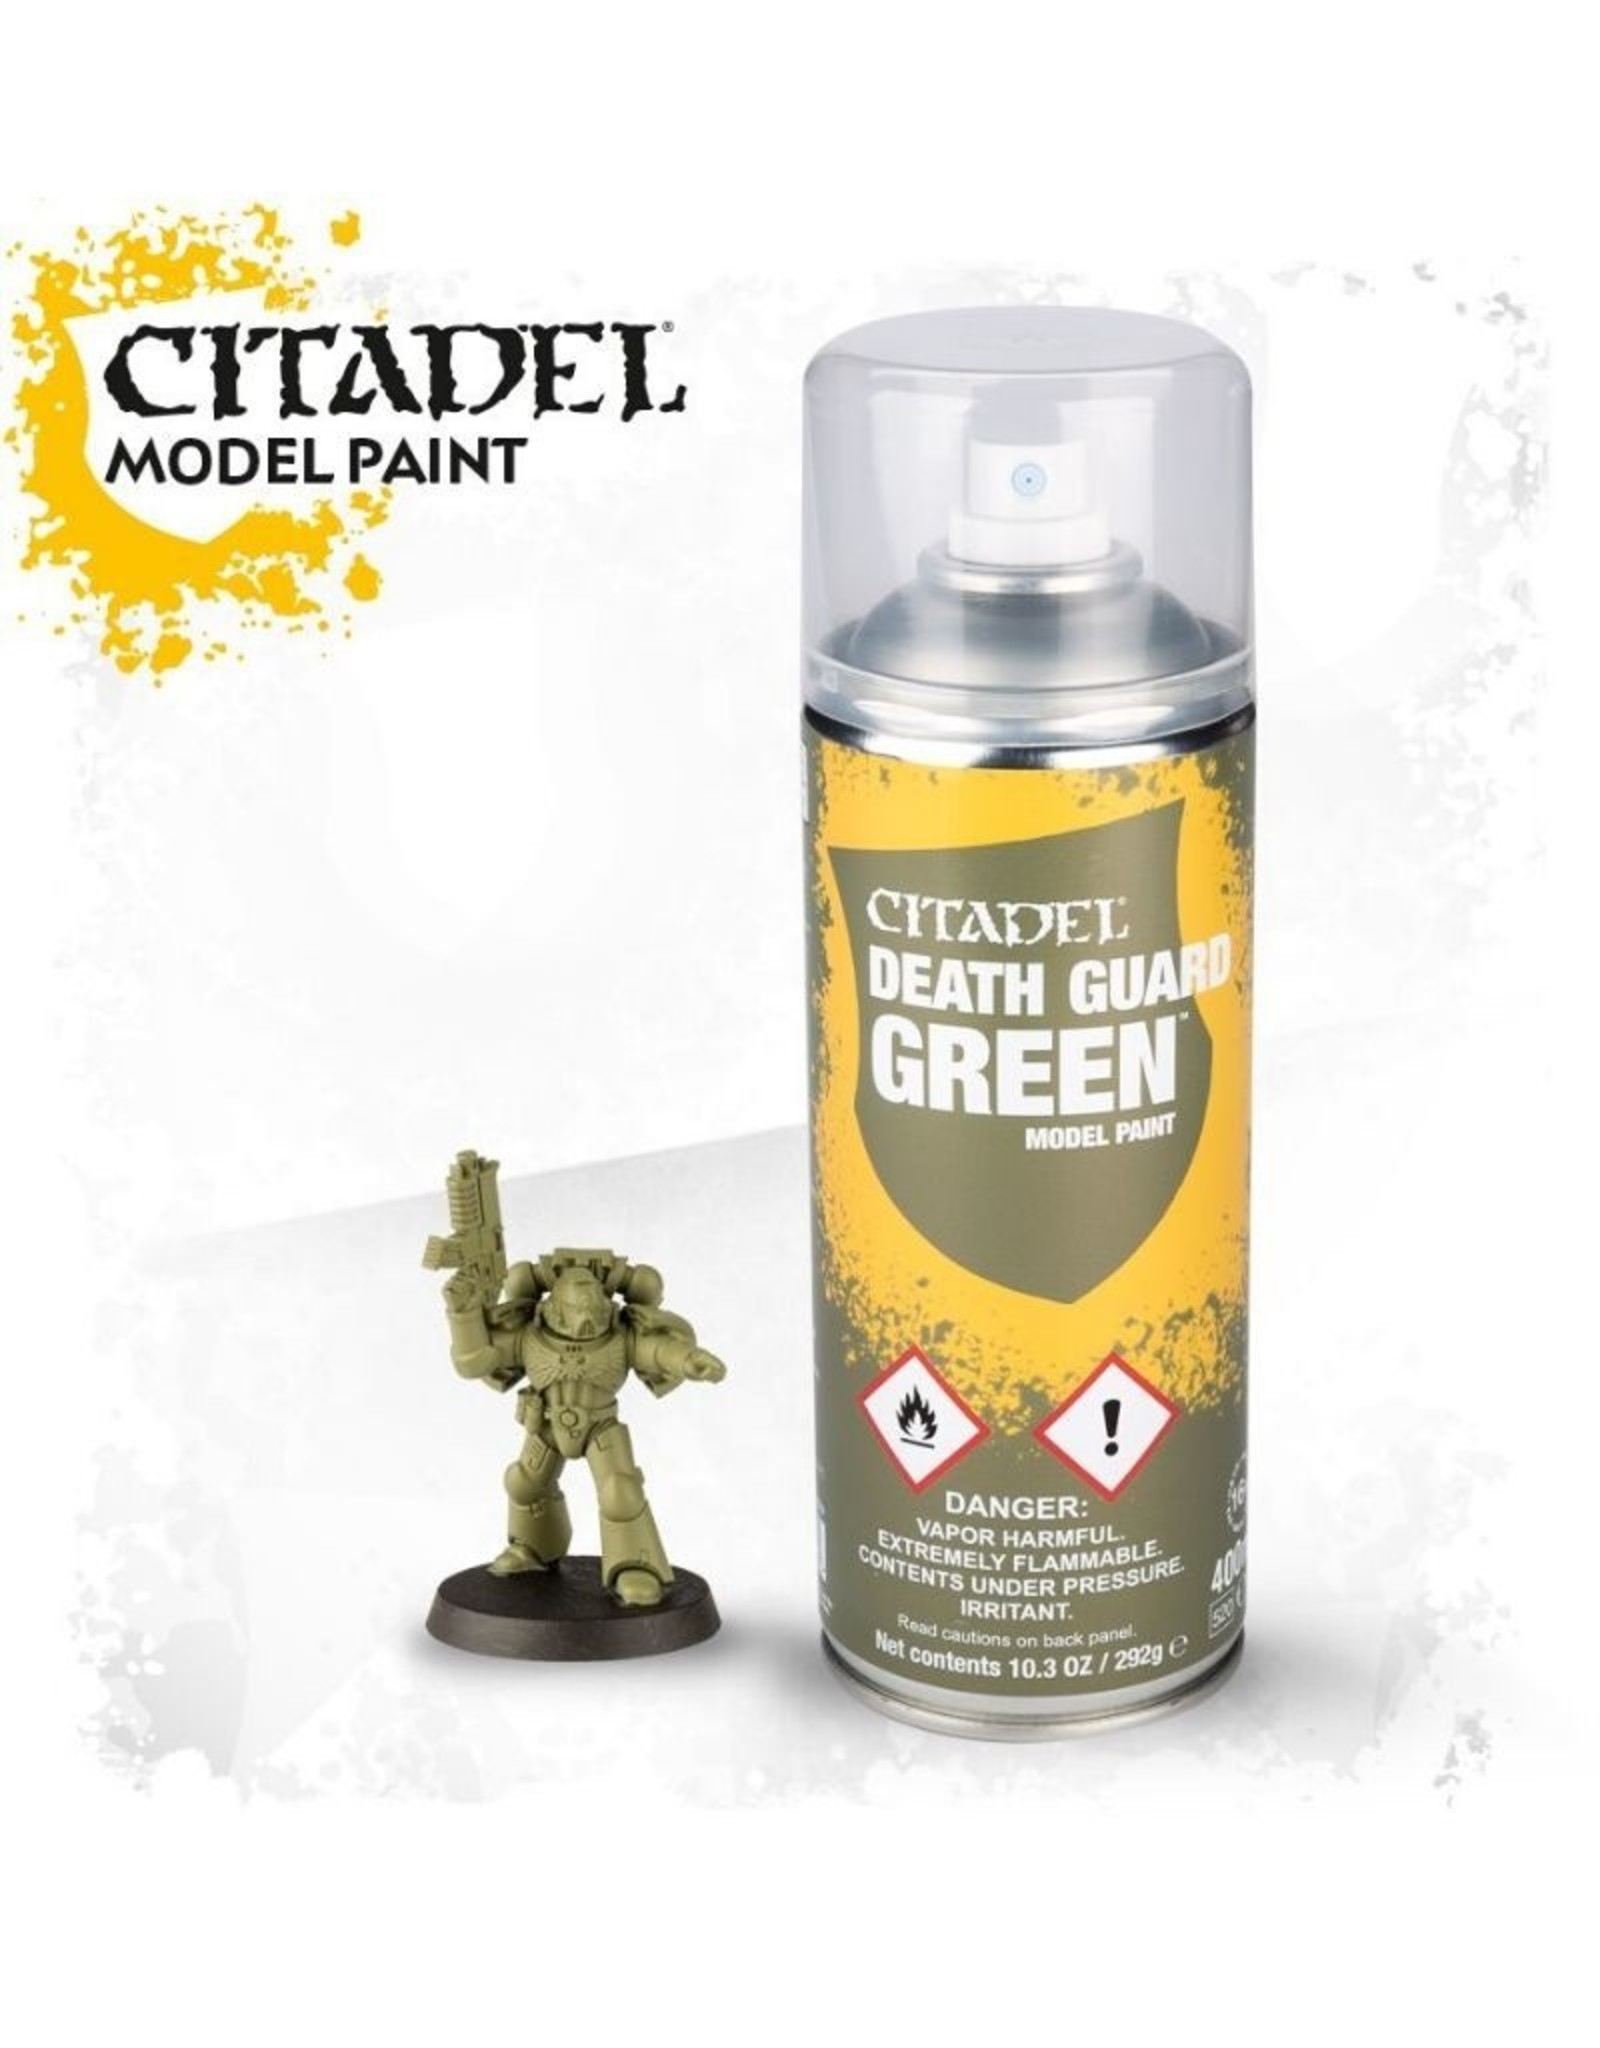 Citadel - Mephiston Red Spray Paint